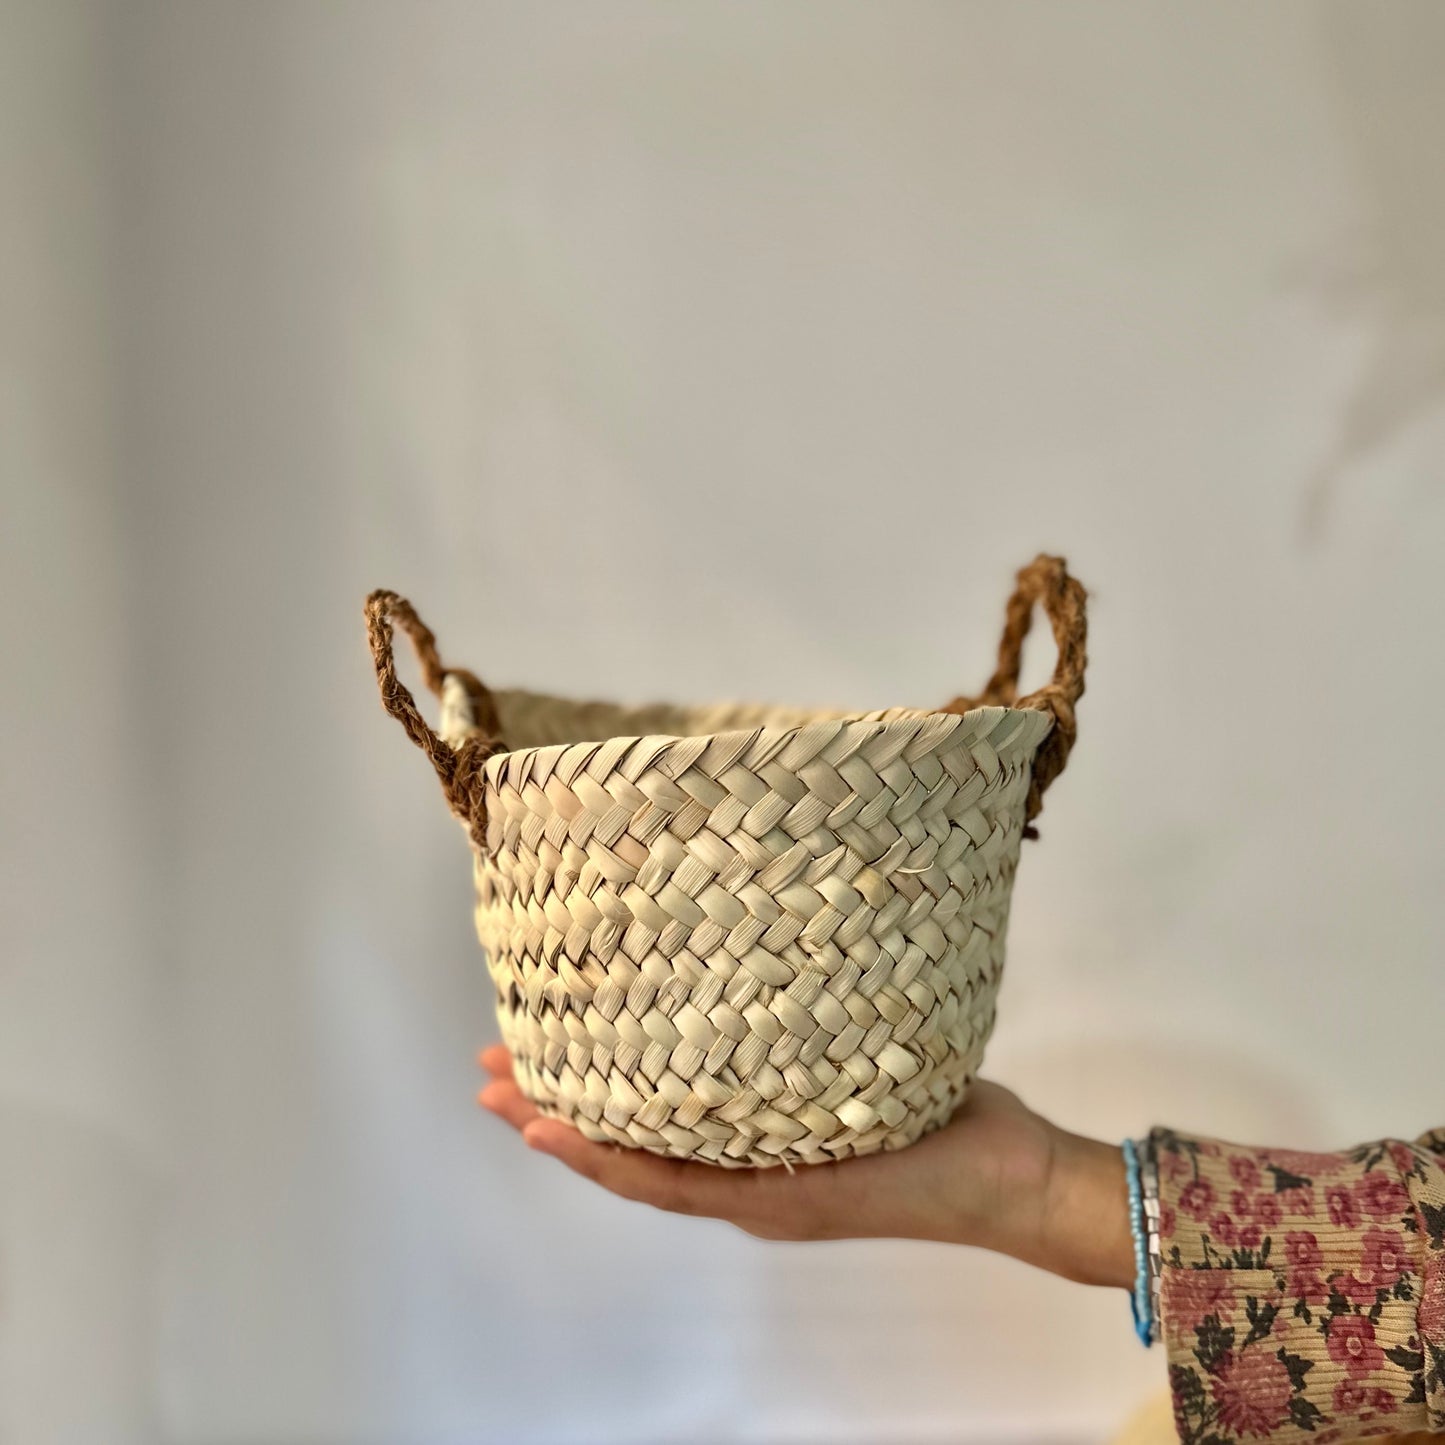 Basket with coir handles